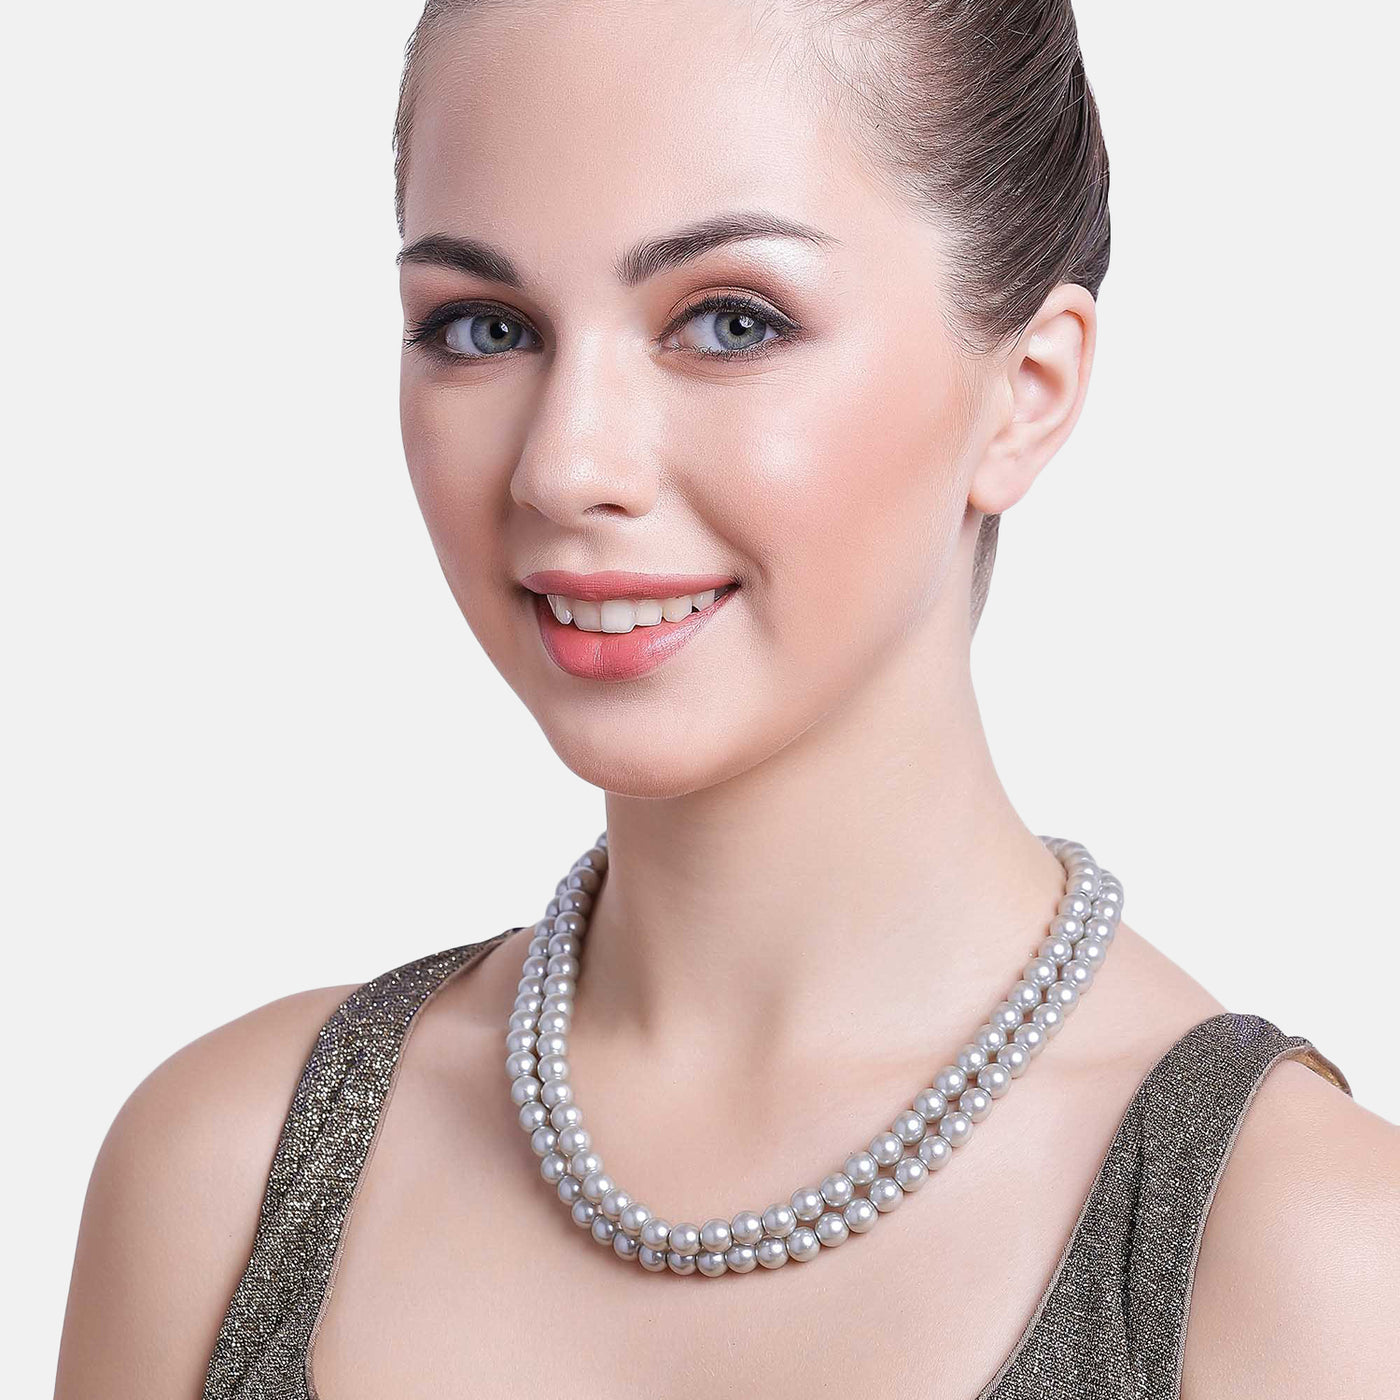 Estele Grey double line pearl necklace